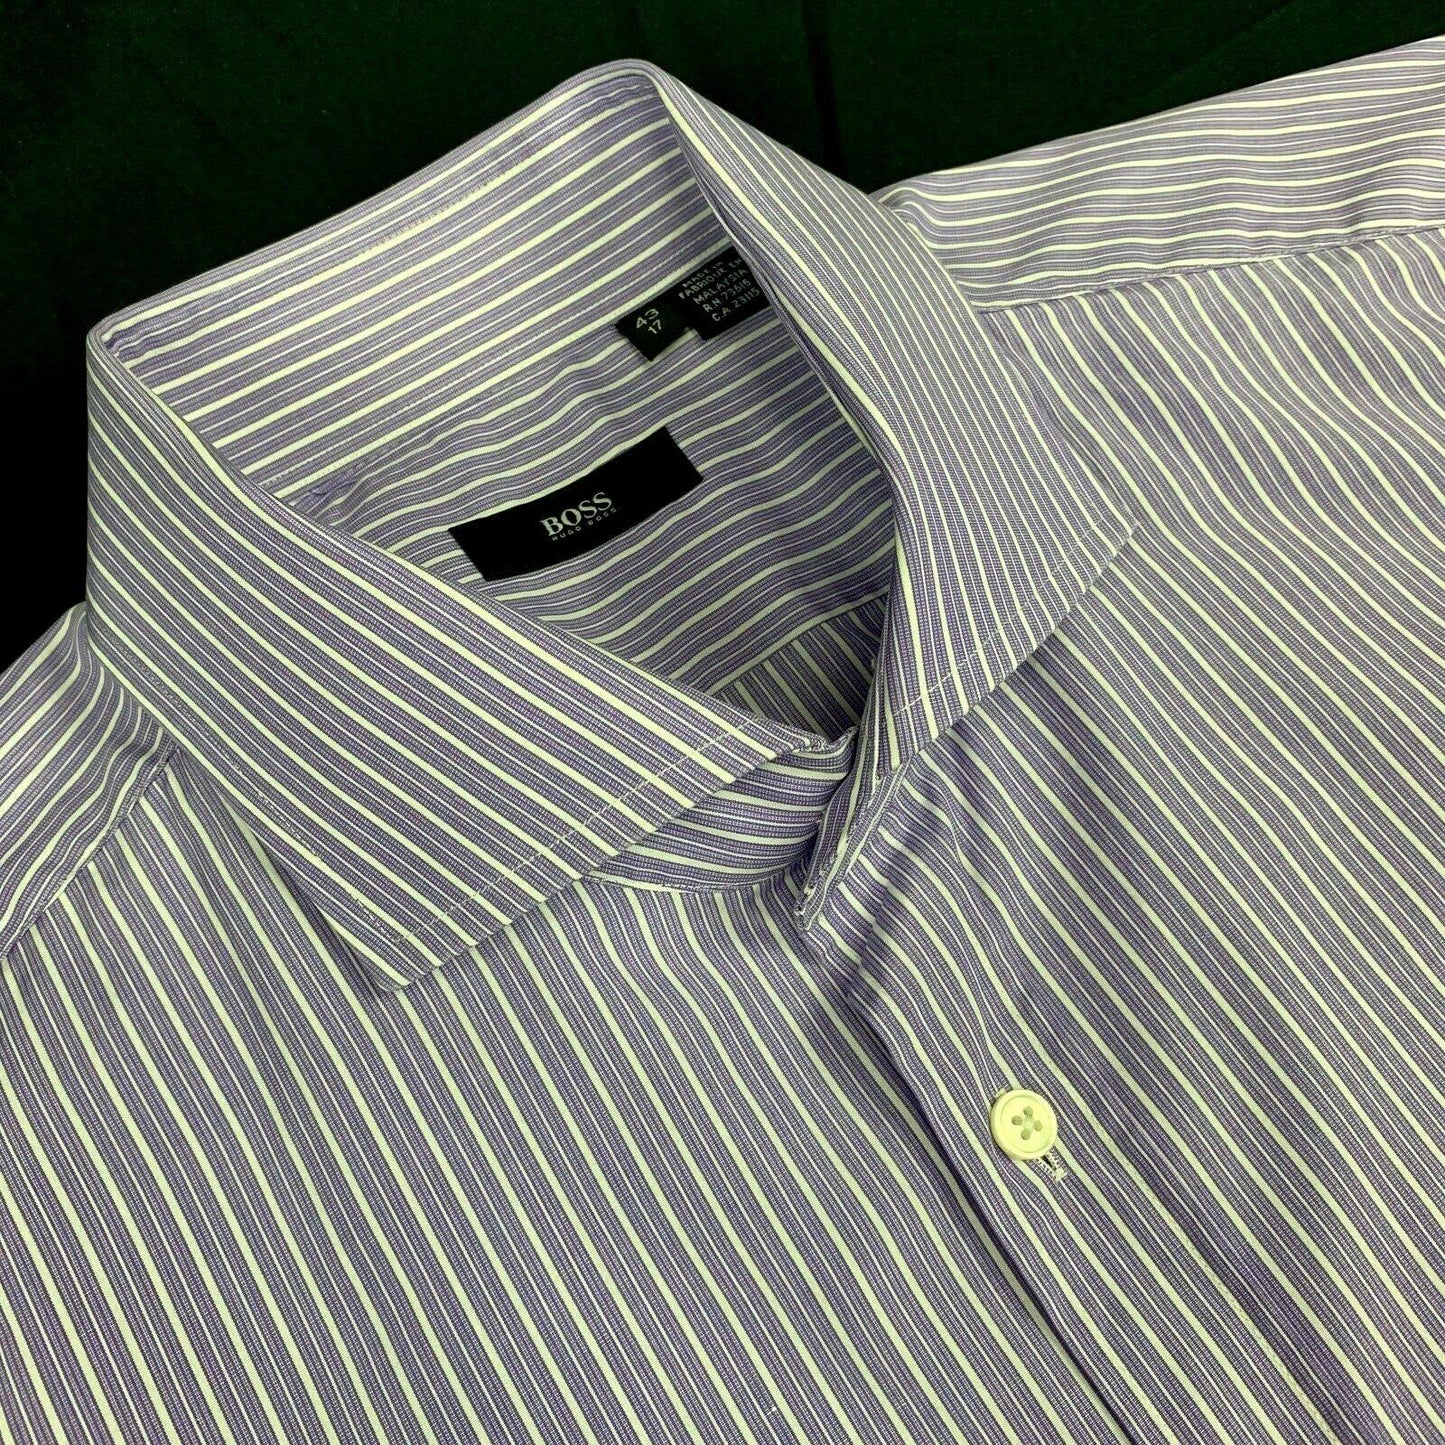 Hugo Boss Blue Striped Large 17 / 43 Regular Fit Dress Shirt - Genuine Design Luxury Consignment